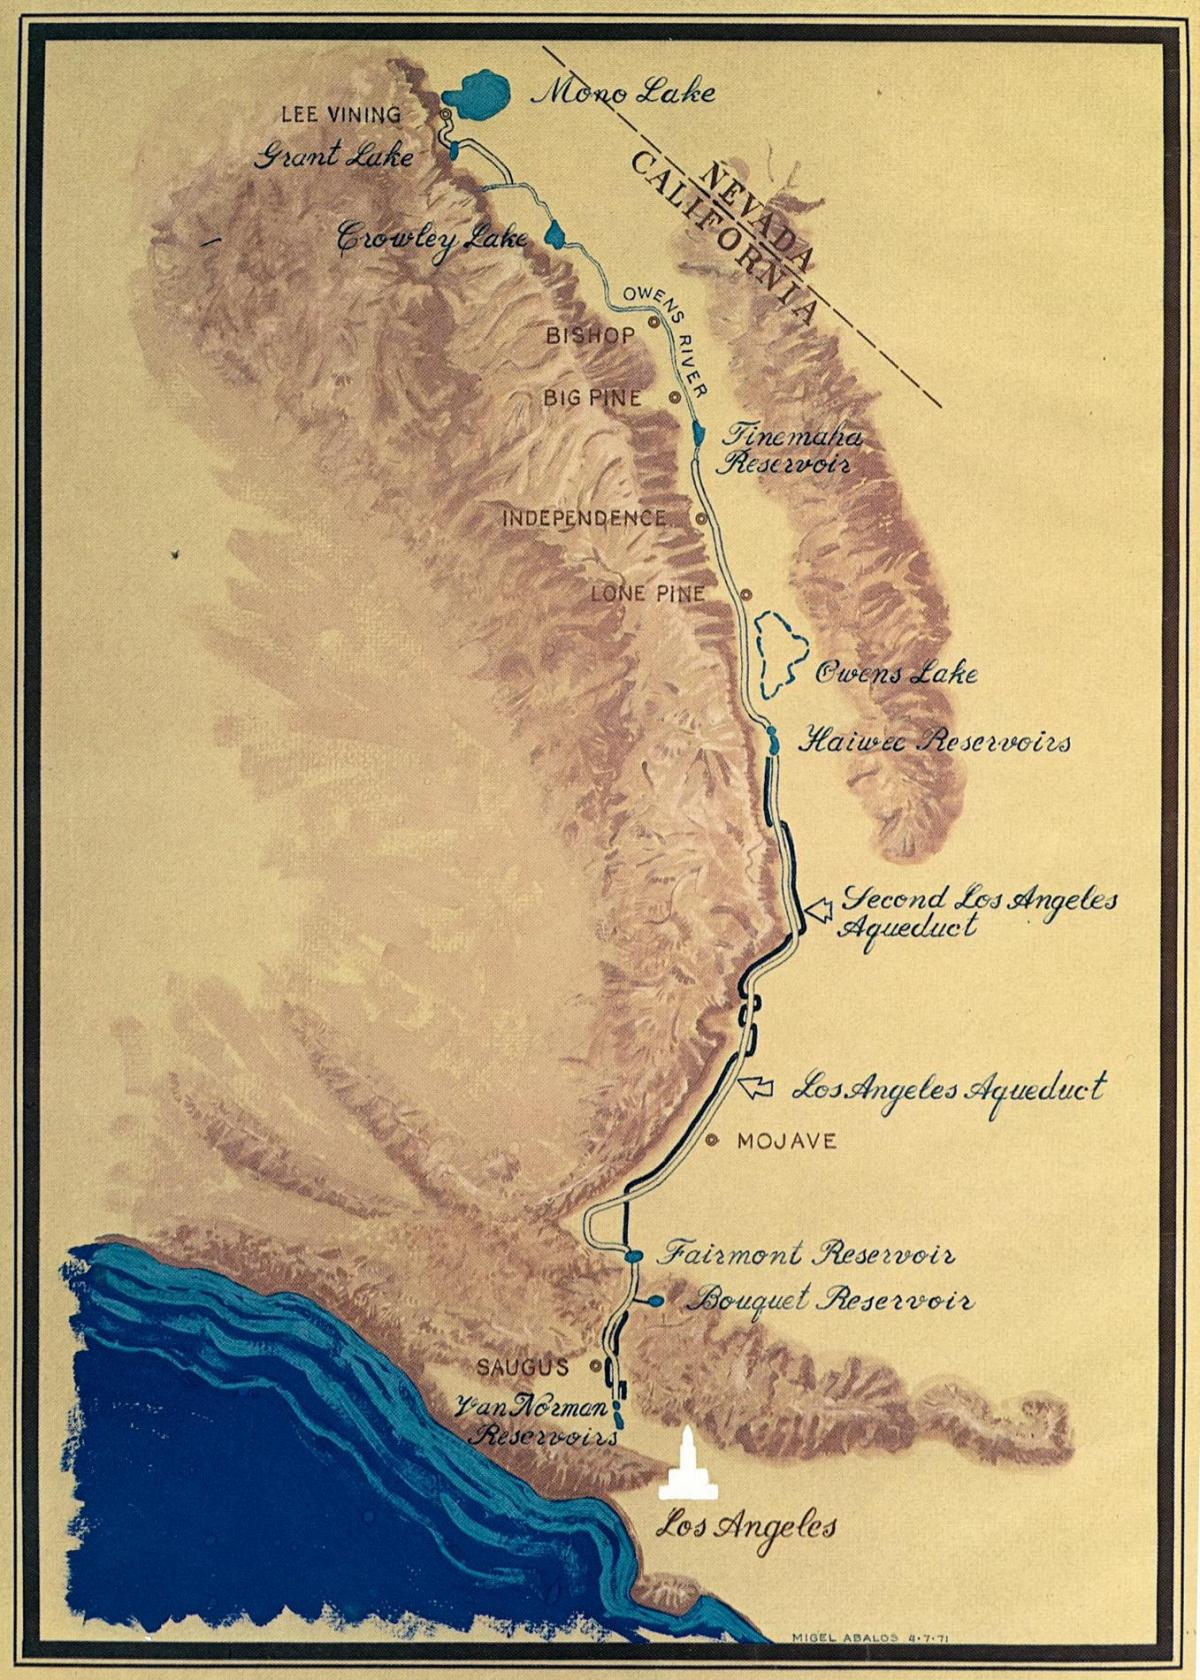 mapa Los Angeles akwedukt